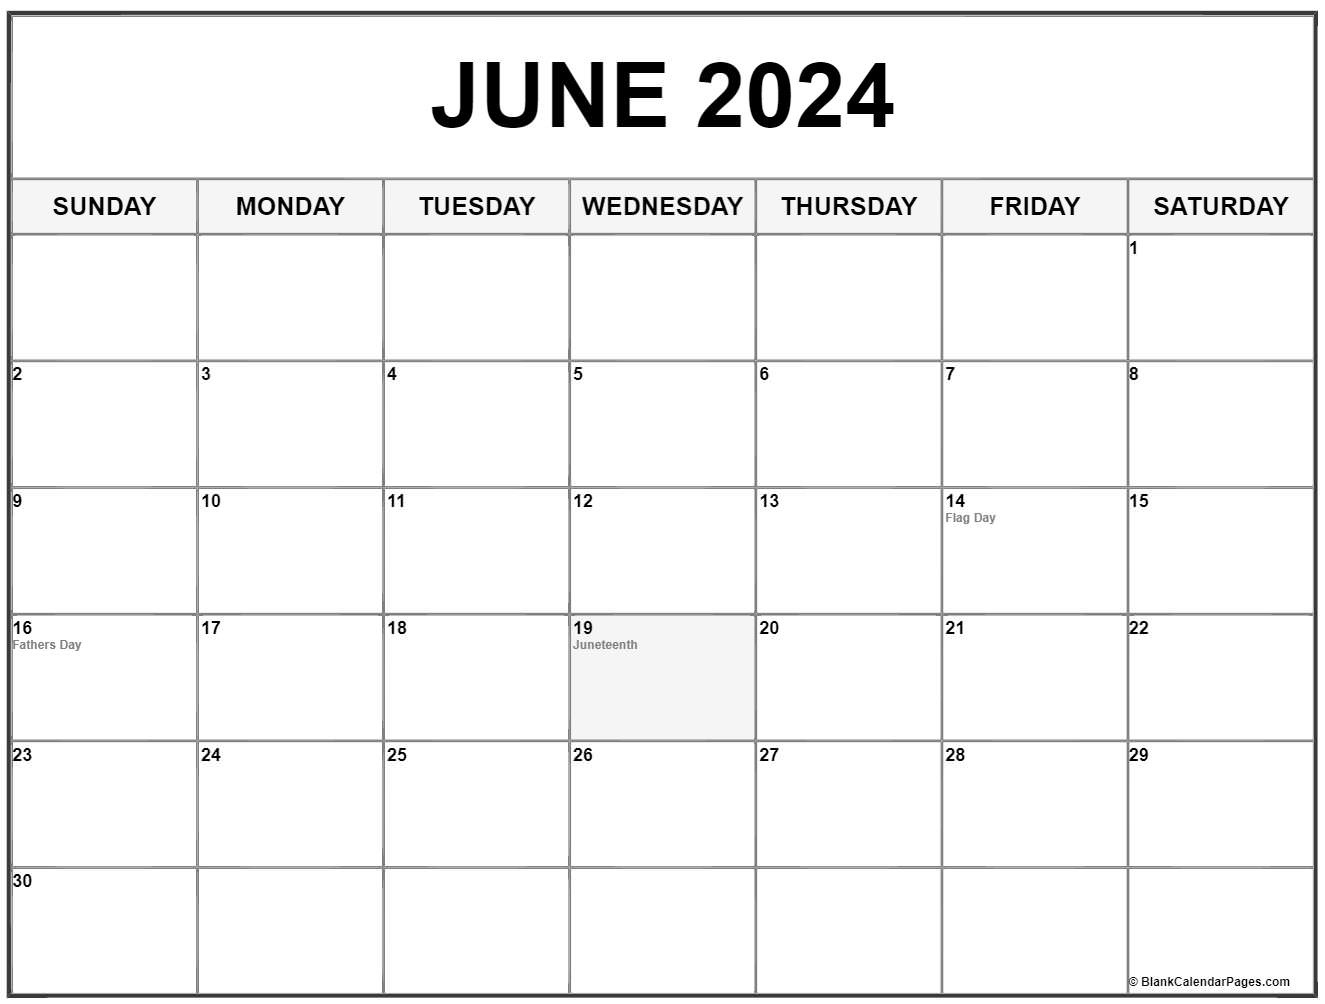 June 2024 With Holidays Calendar pertaining to June Holiday Calendar 2024